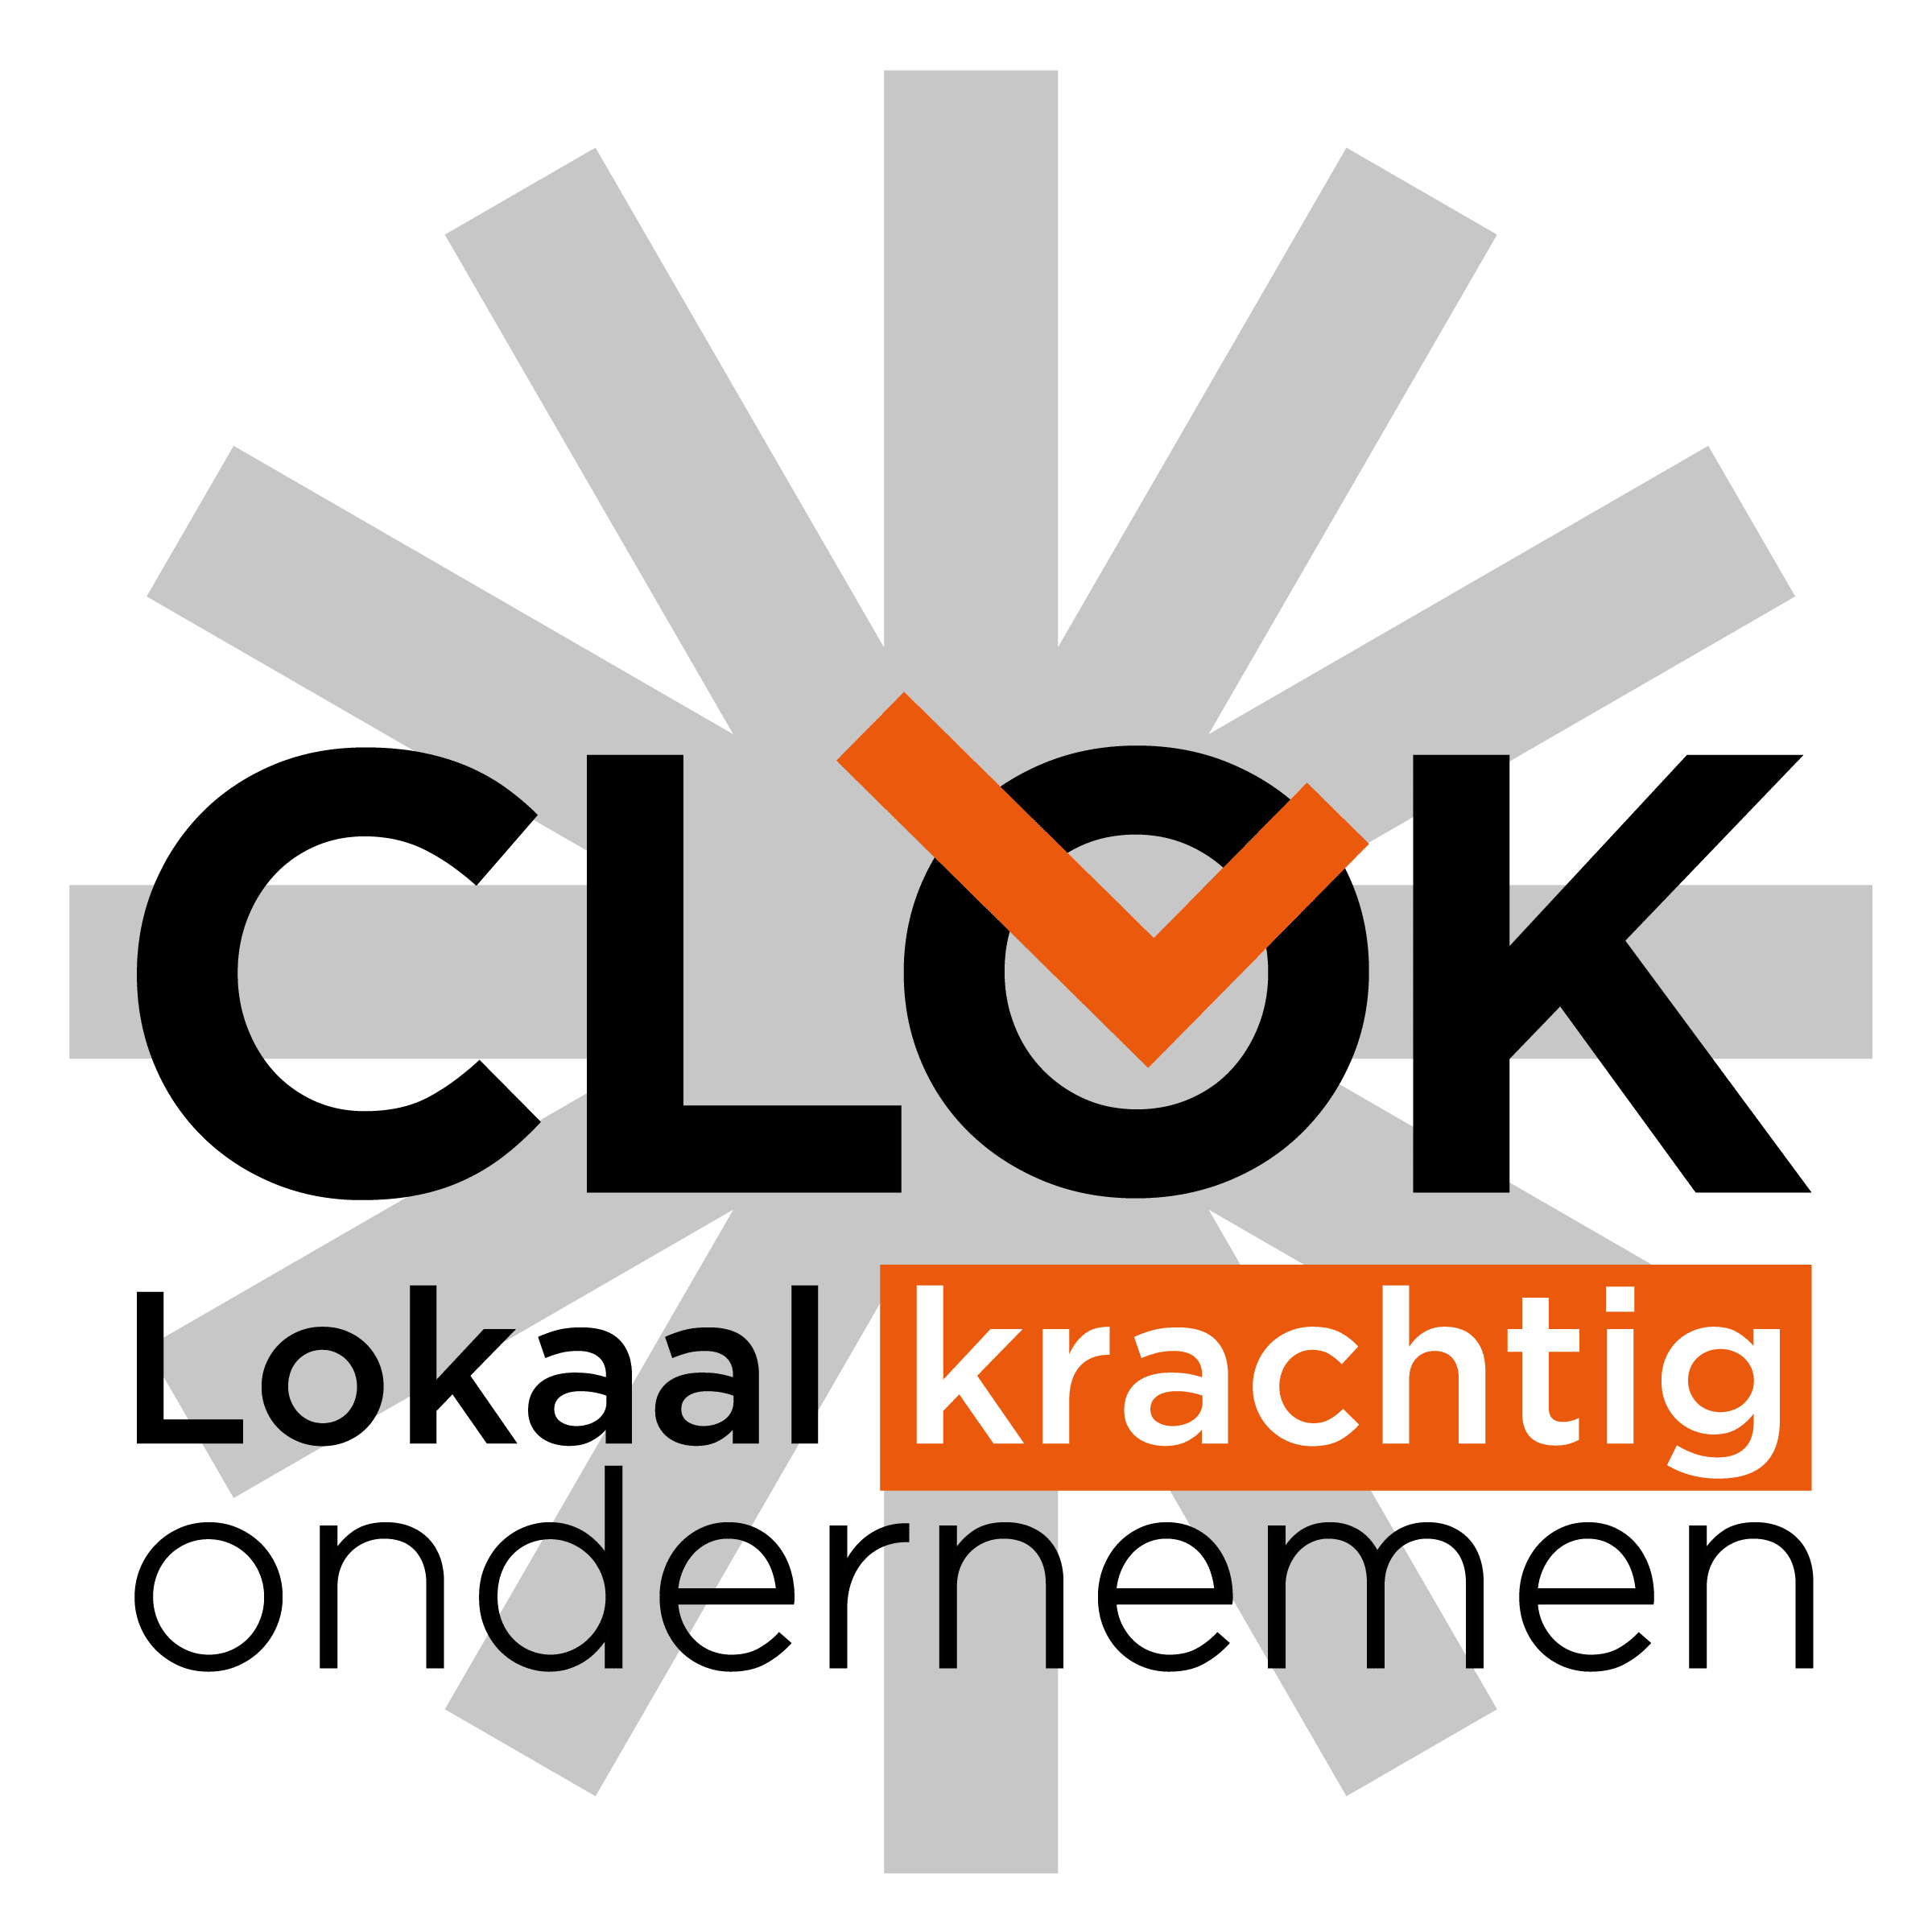 Logo Clok (lokaal krachtig ondernemen)